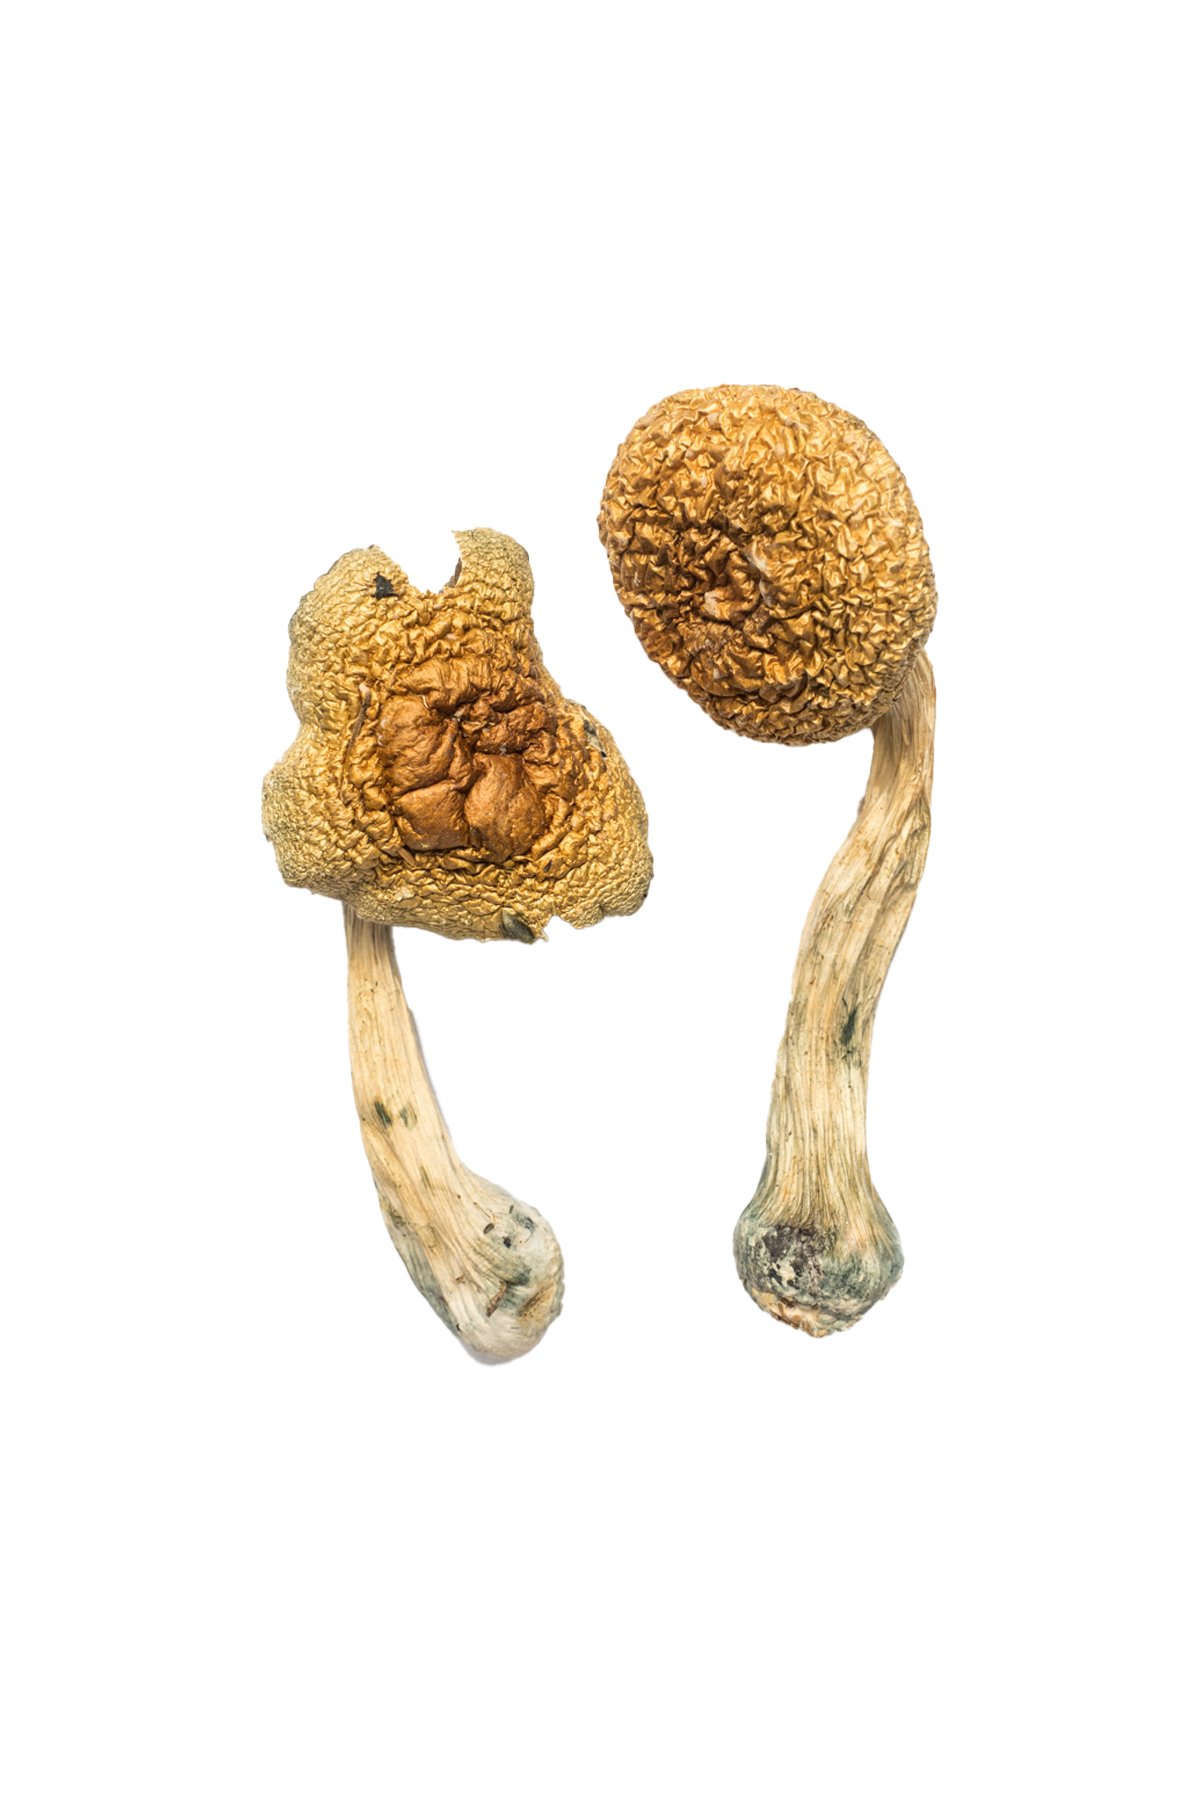 Buy Golden Mammoth Magic Mushrooms Online | Magic Mushrooms Dispensary